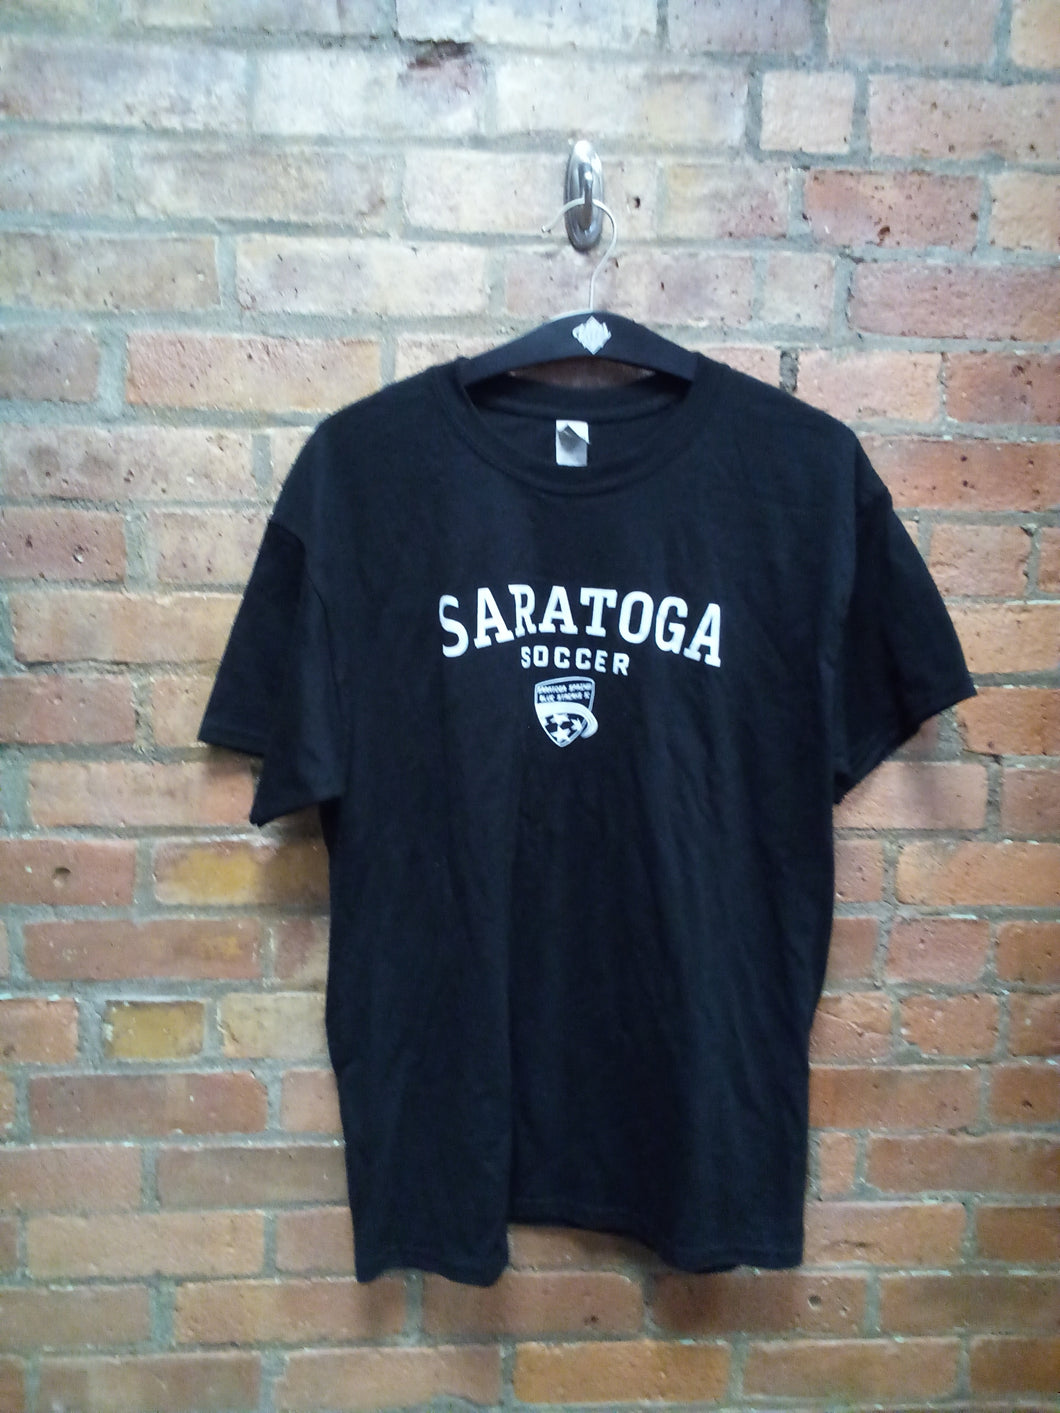 CLEARANCE - Saratoga Soccer T-Shirt - Size Large